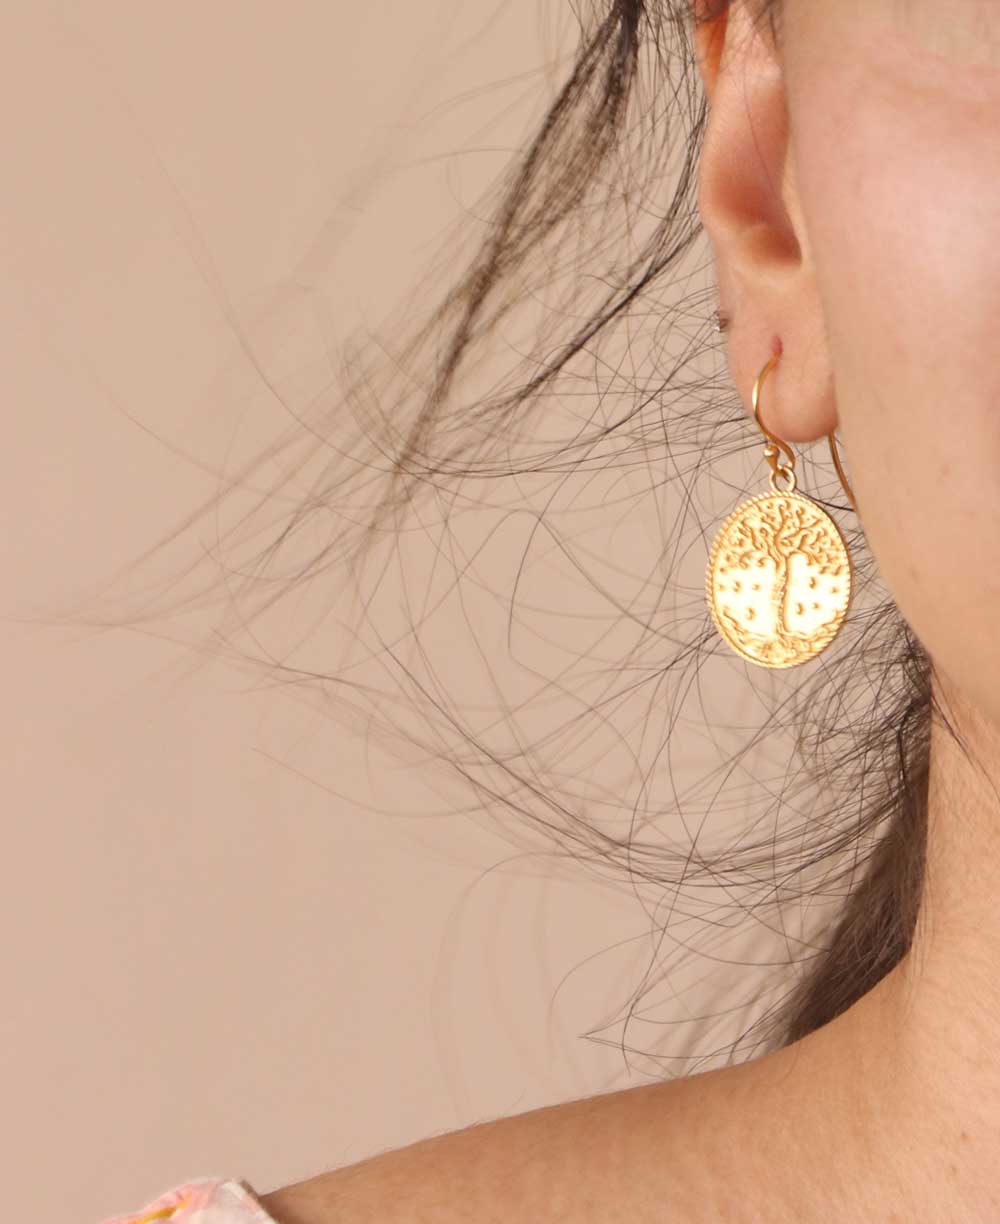 Tree of Life Design Gold Plated Earrings - Earrings